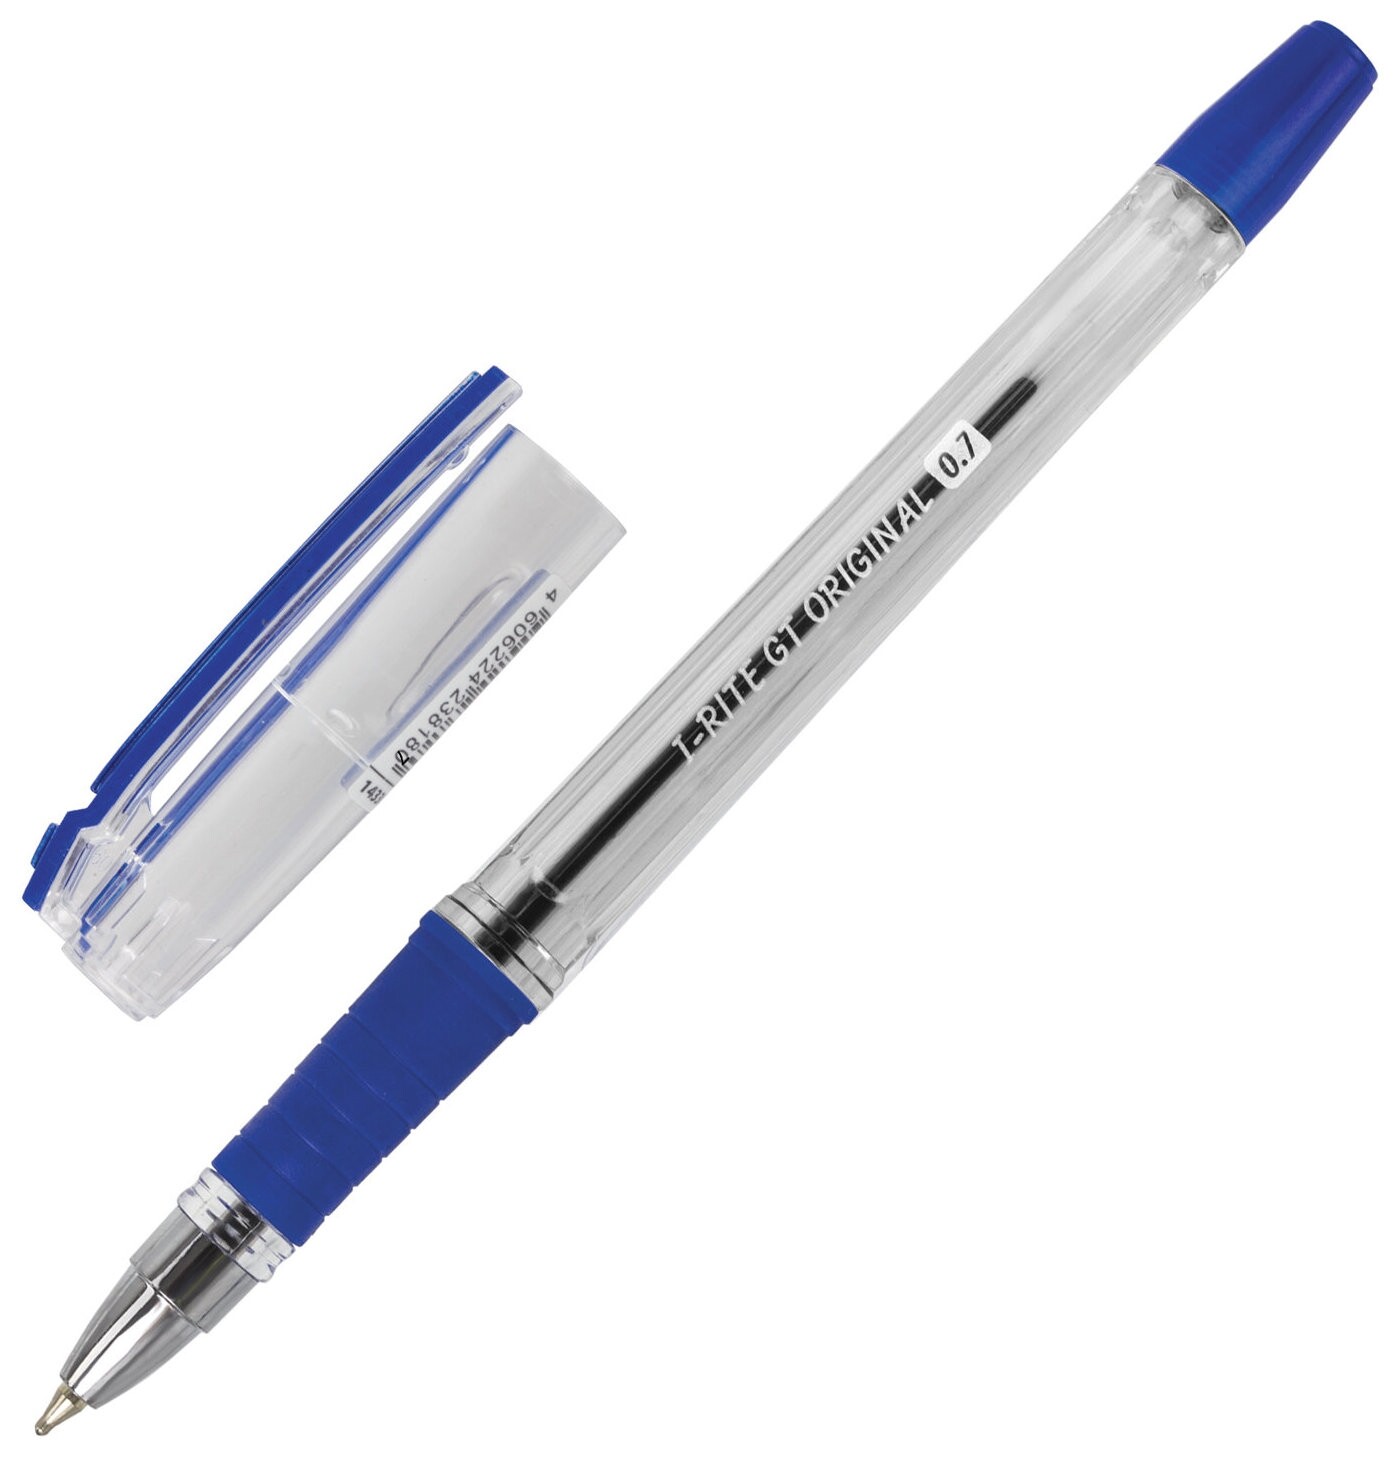 Ручка шариковая масляная с грипом Brauberg I-rite Gt, синяя, корпус прозрачный, узел 0,7 мм, 143300 Brauberg